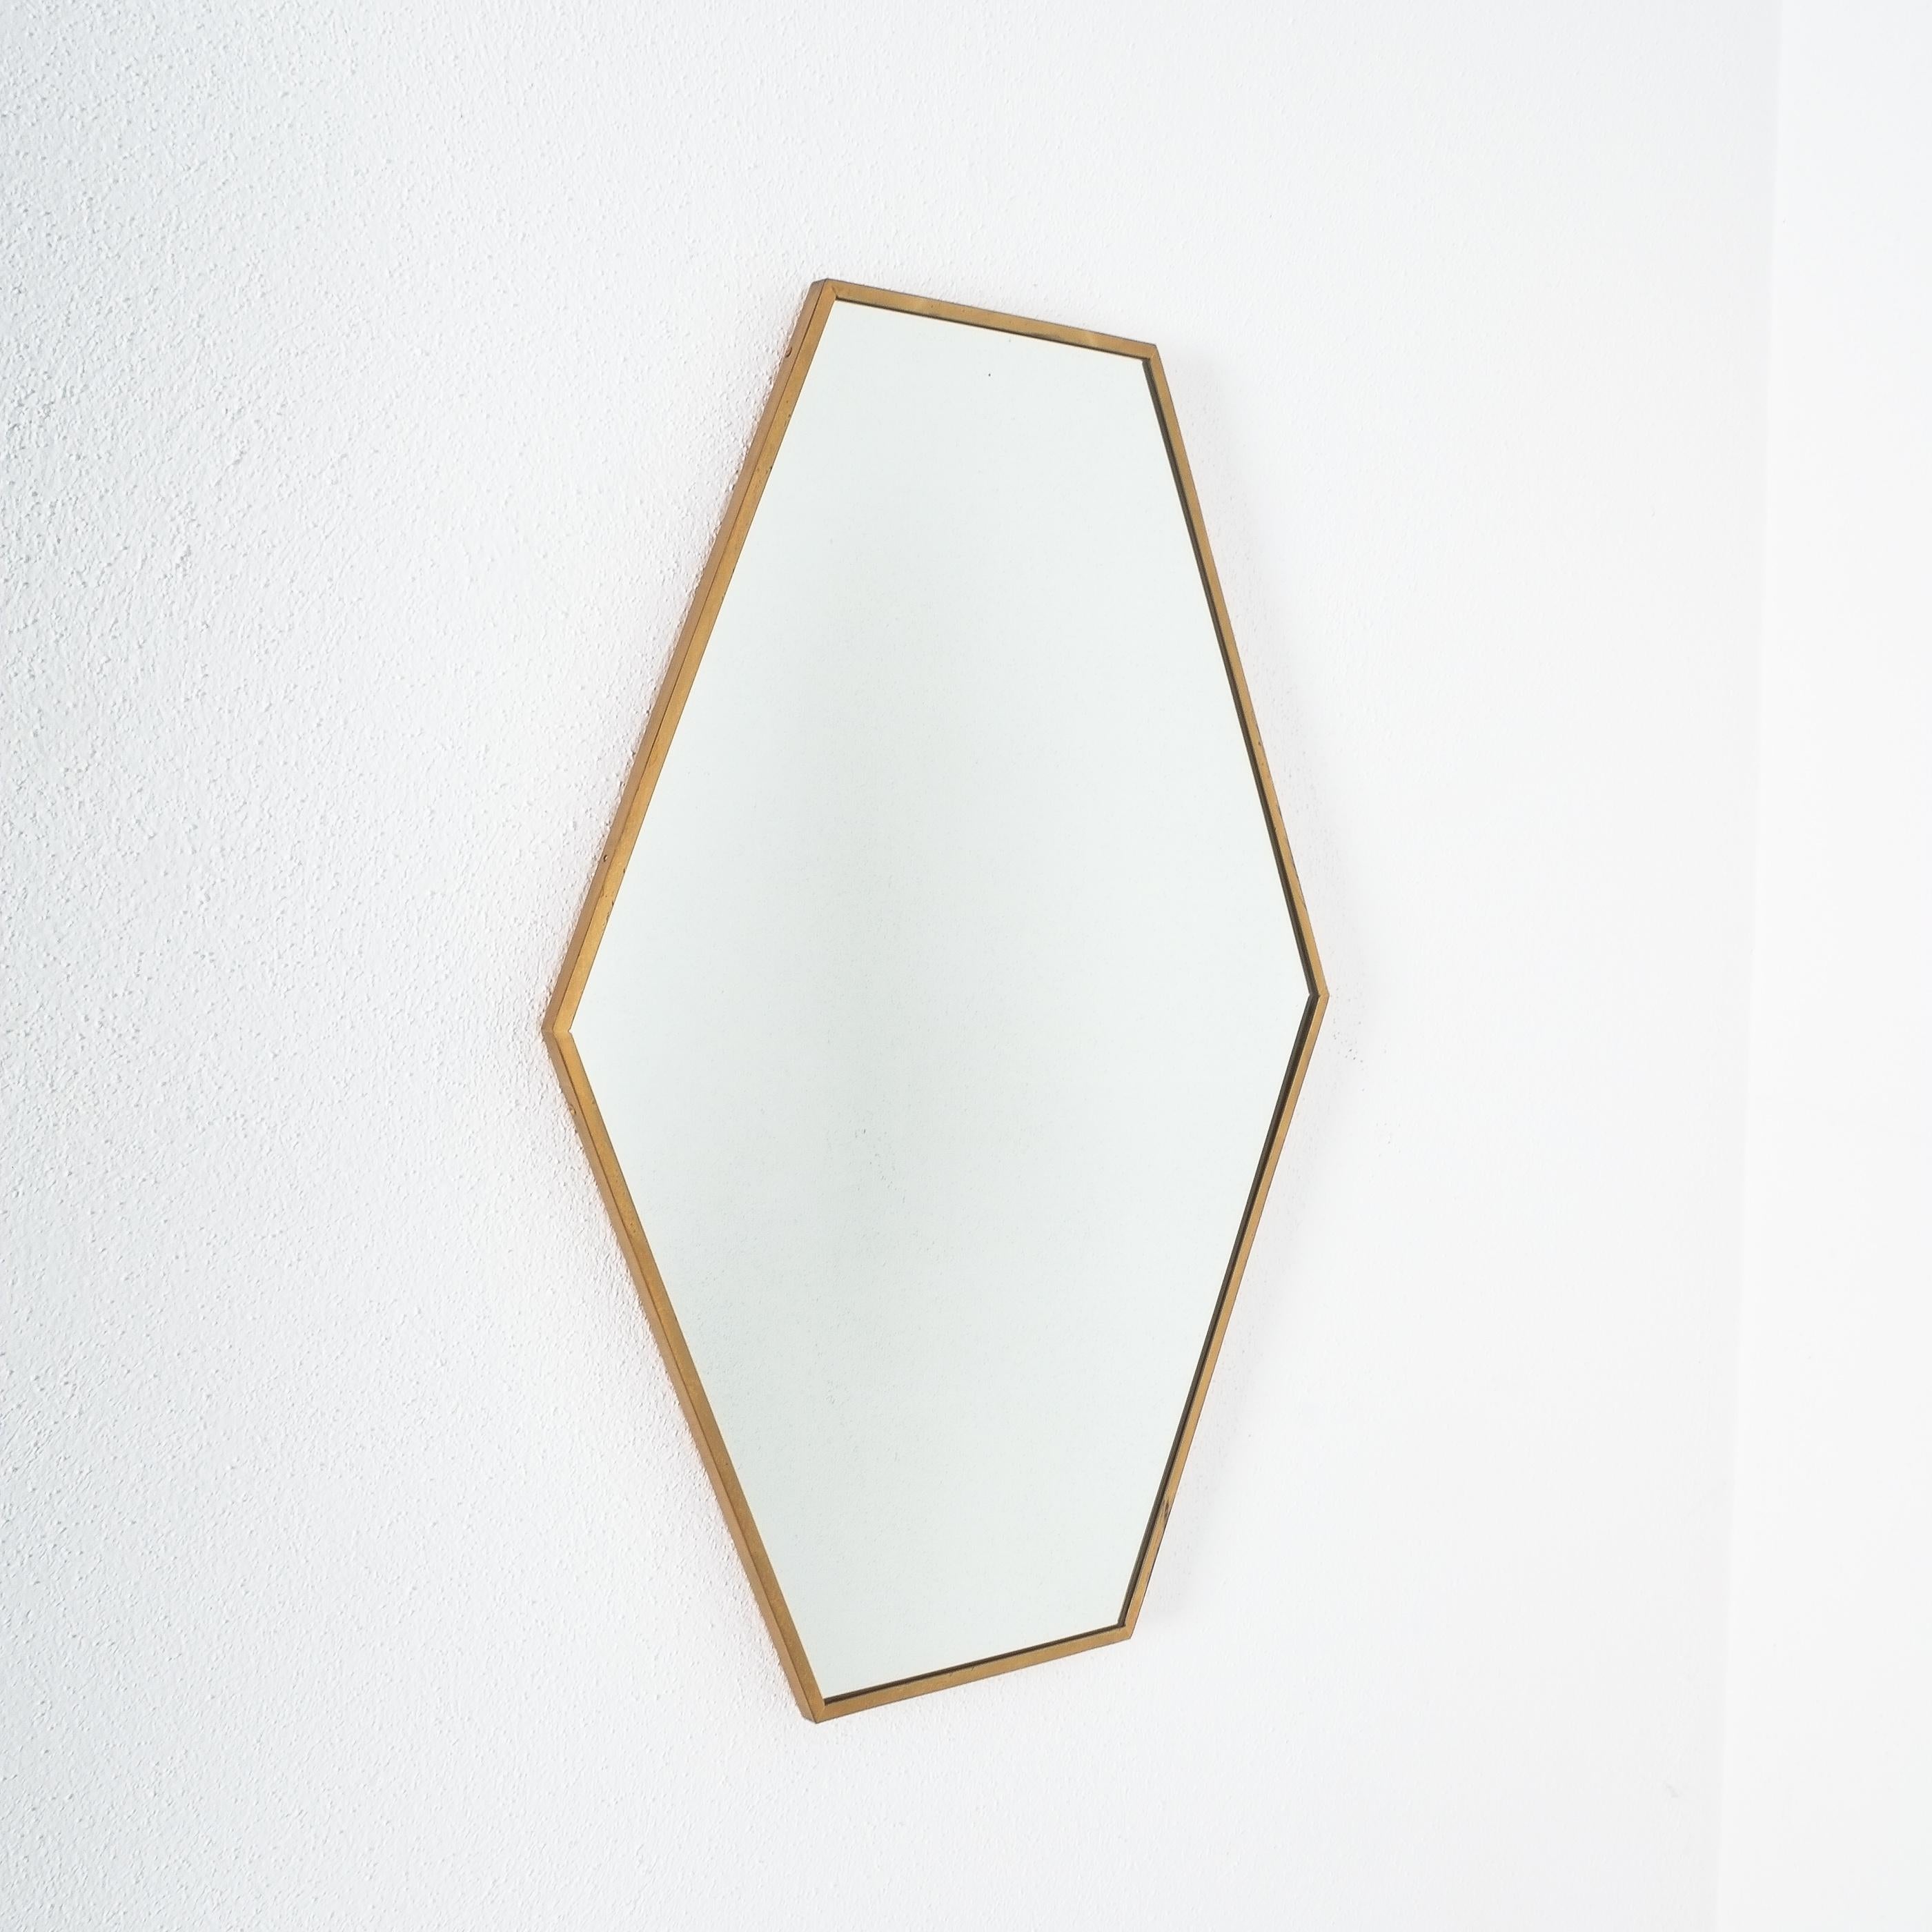 Mid-Century Modern Brass Mirror Hexagonal, Midcentury, Italy For Sale